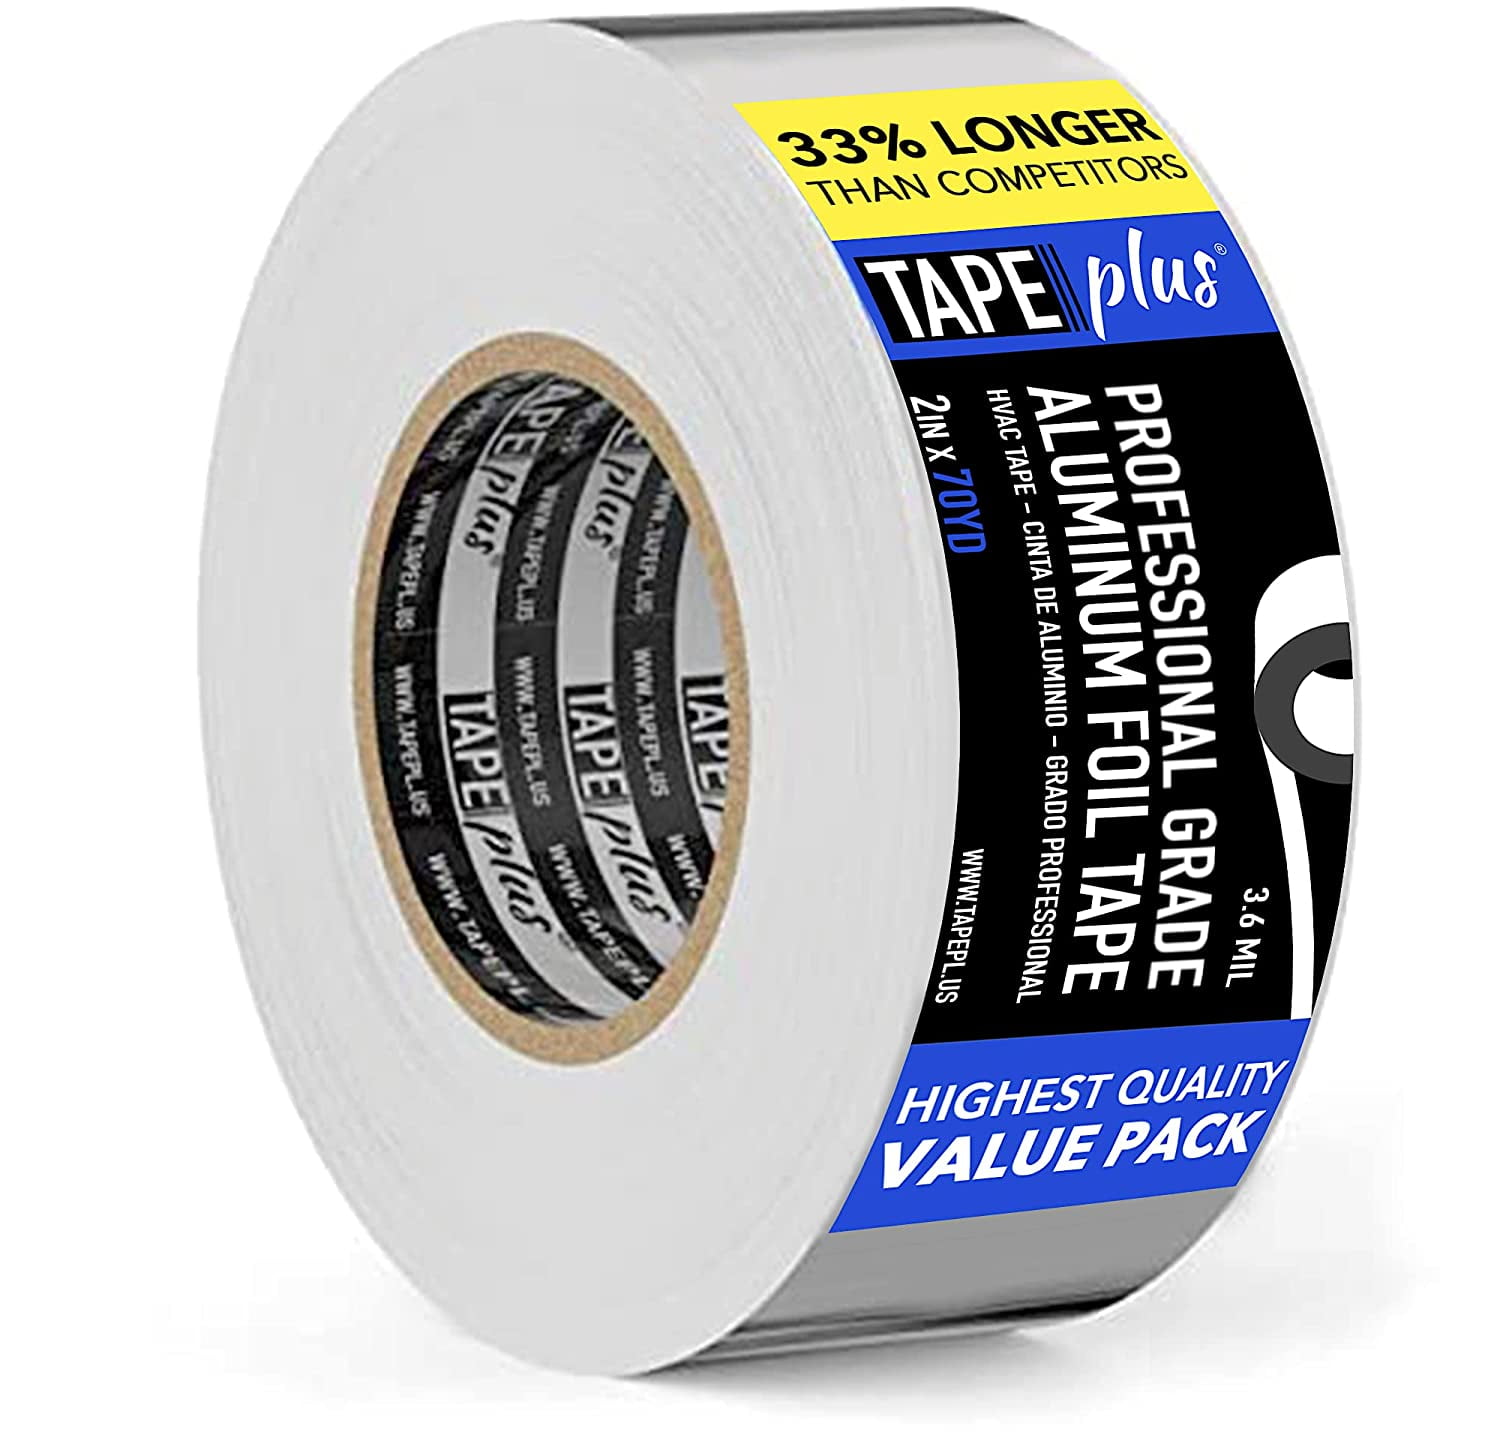 Heat Resistant Tape - High Temperature Heat Transfer Tape Aluminum Foil  Adhesive Tape 55mm x 20m(66ft) 